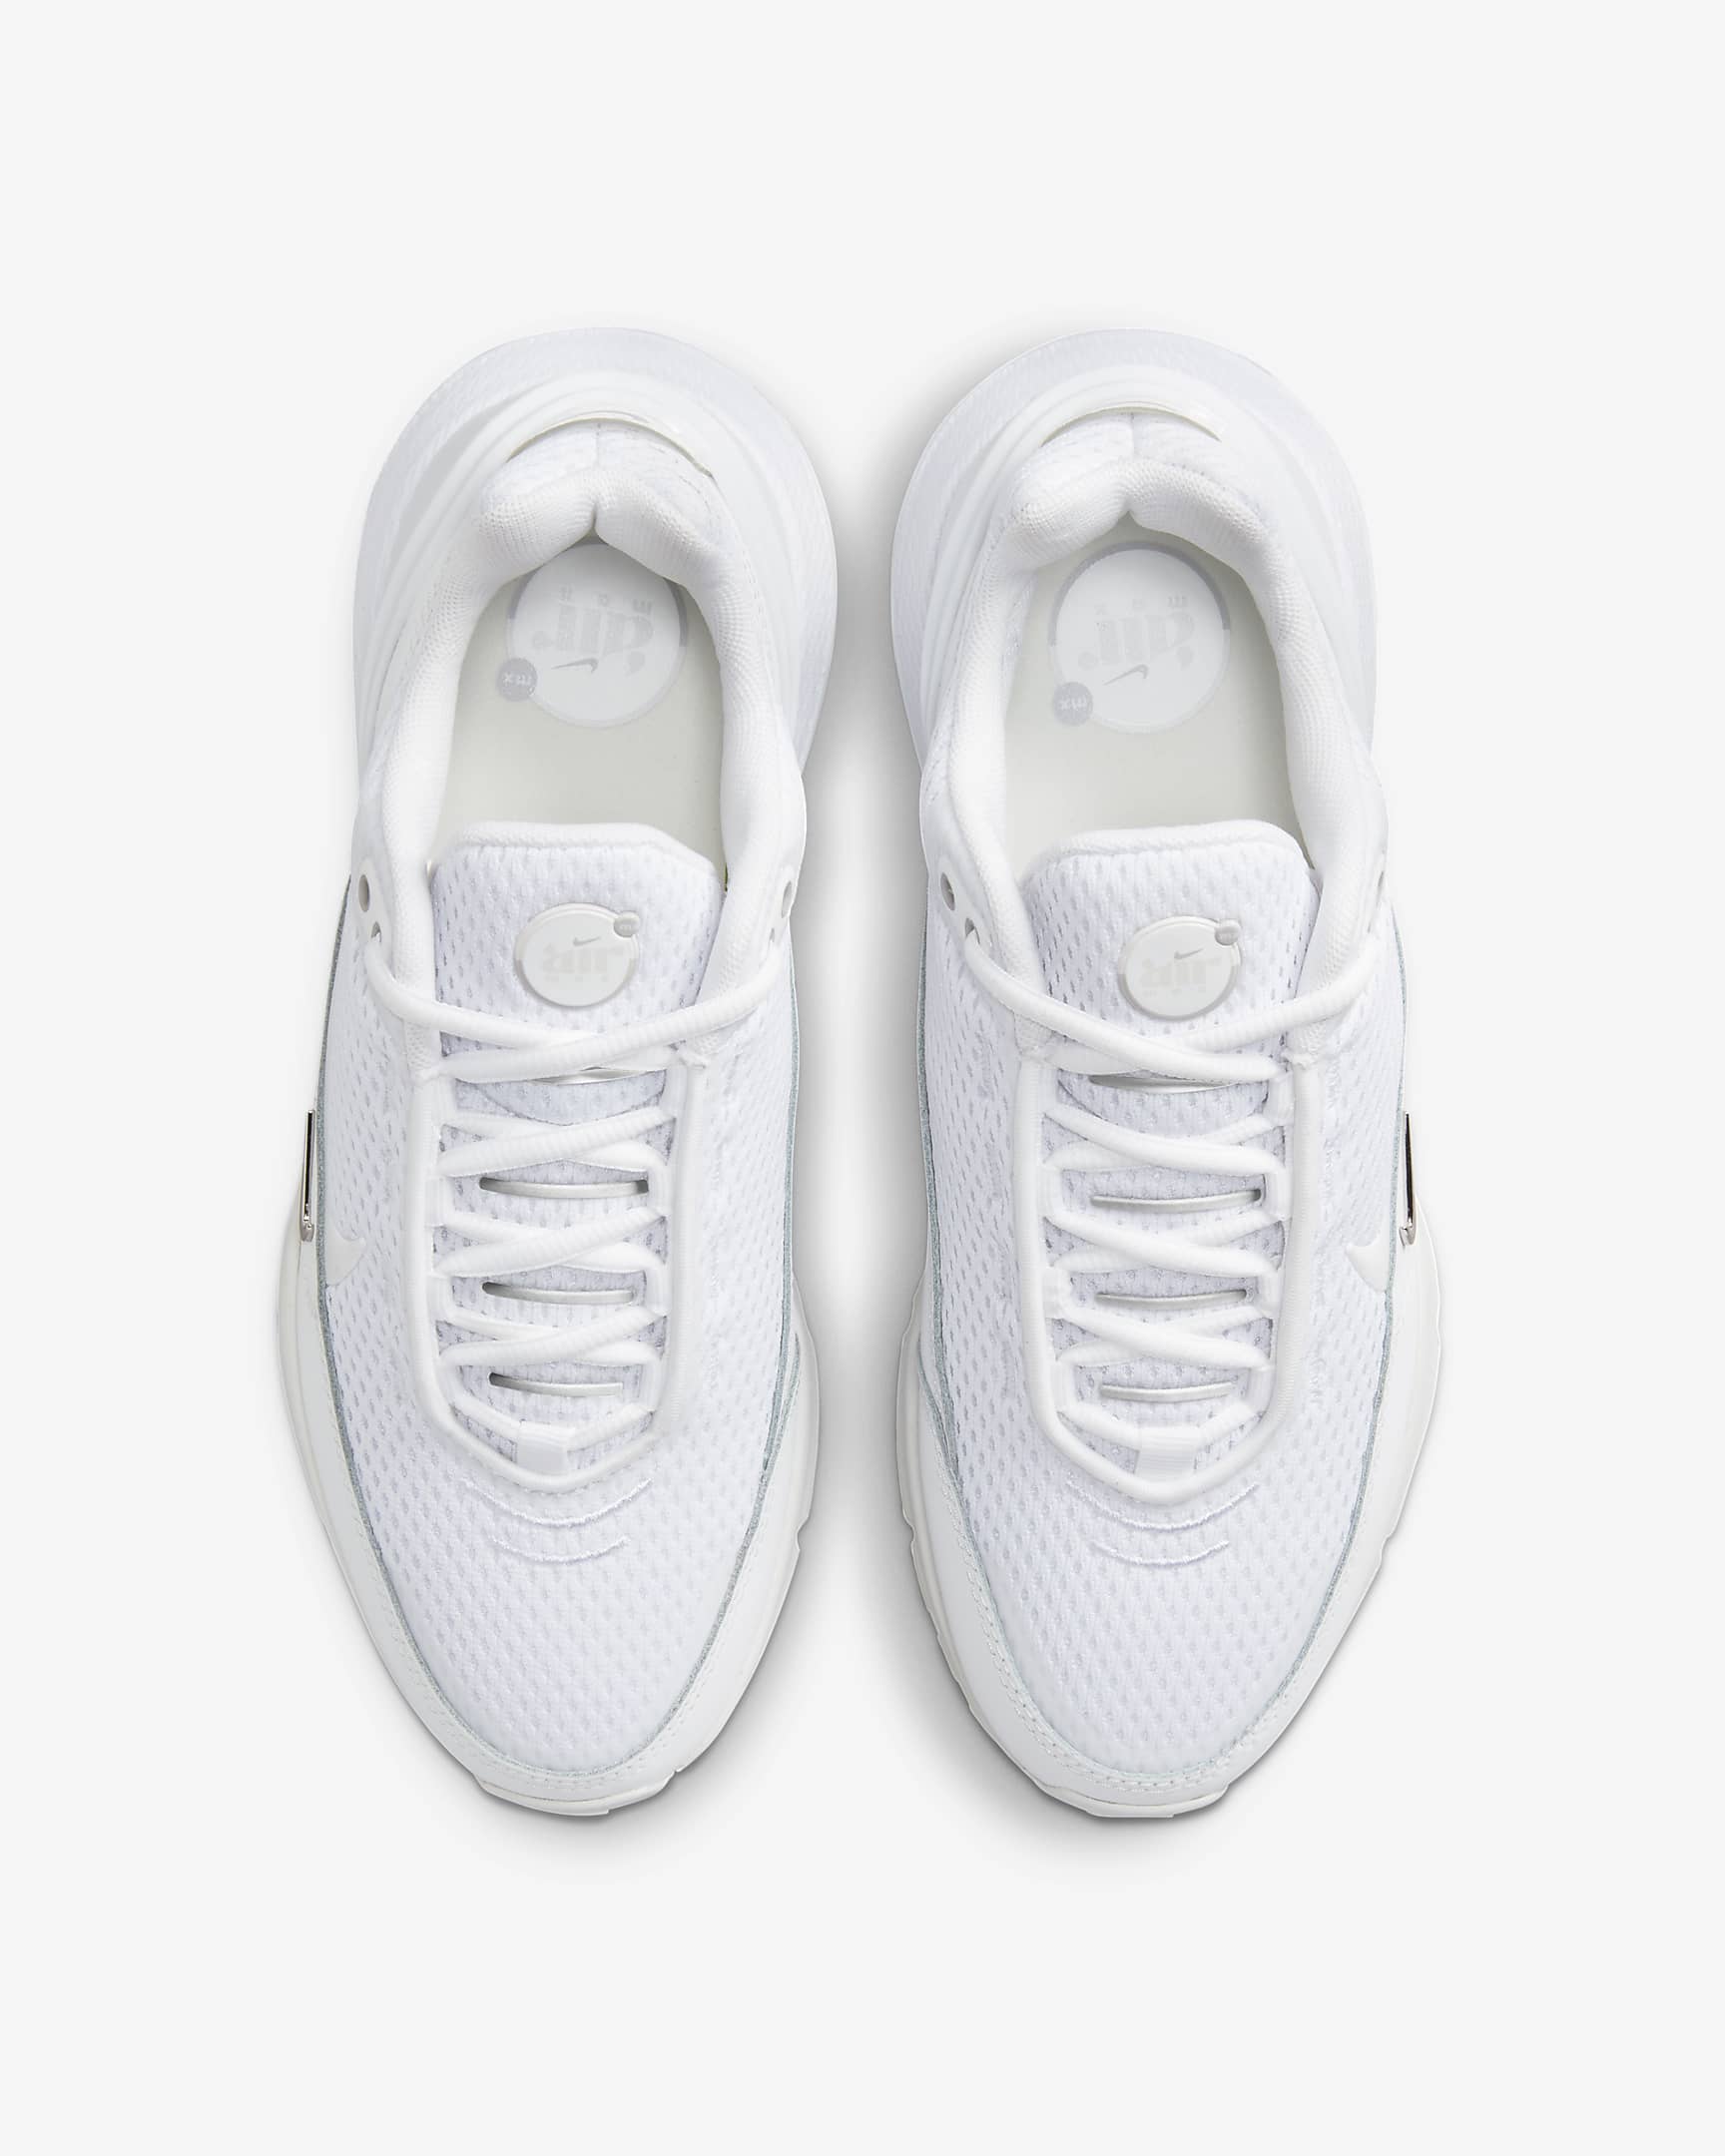 Nike Air Max Pulse Women's Shoes - White/Summit White/Platinum Tint/White